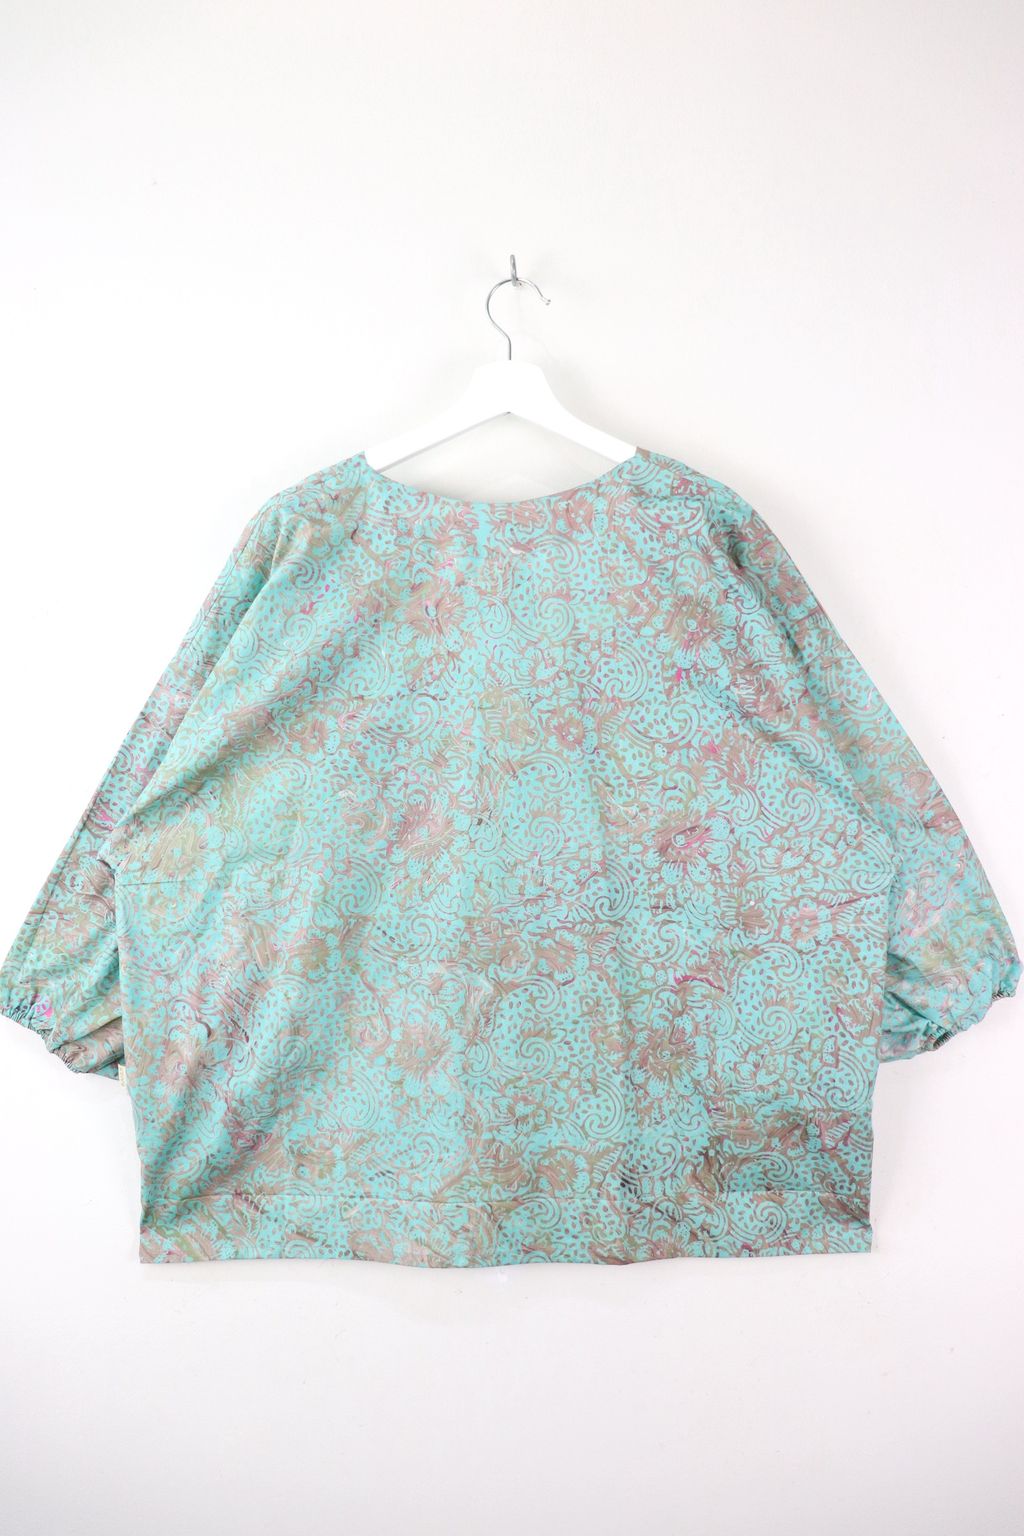 handmade-batik-terap-kimono-signature-19